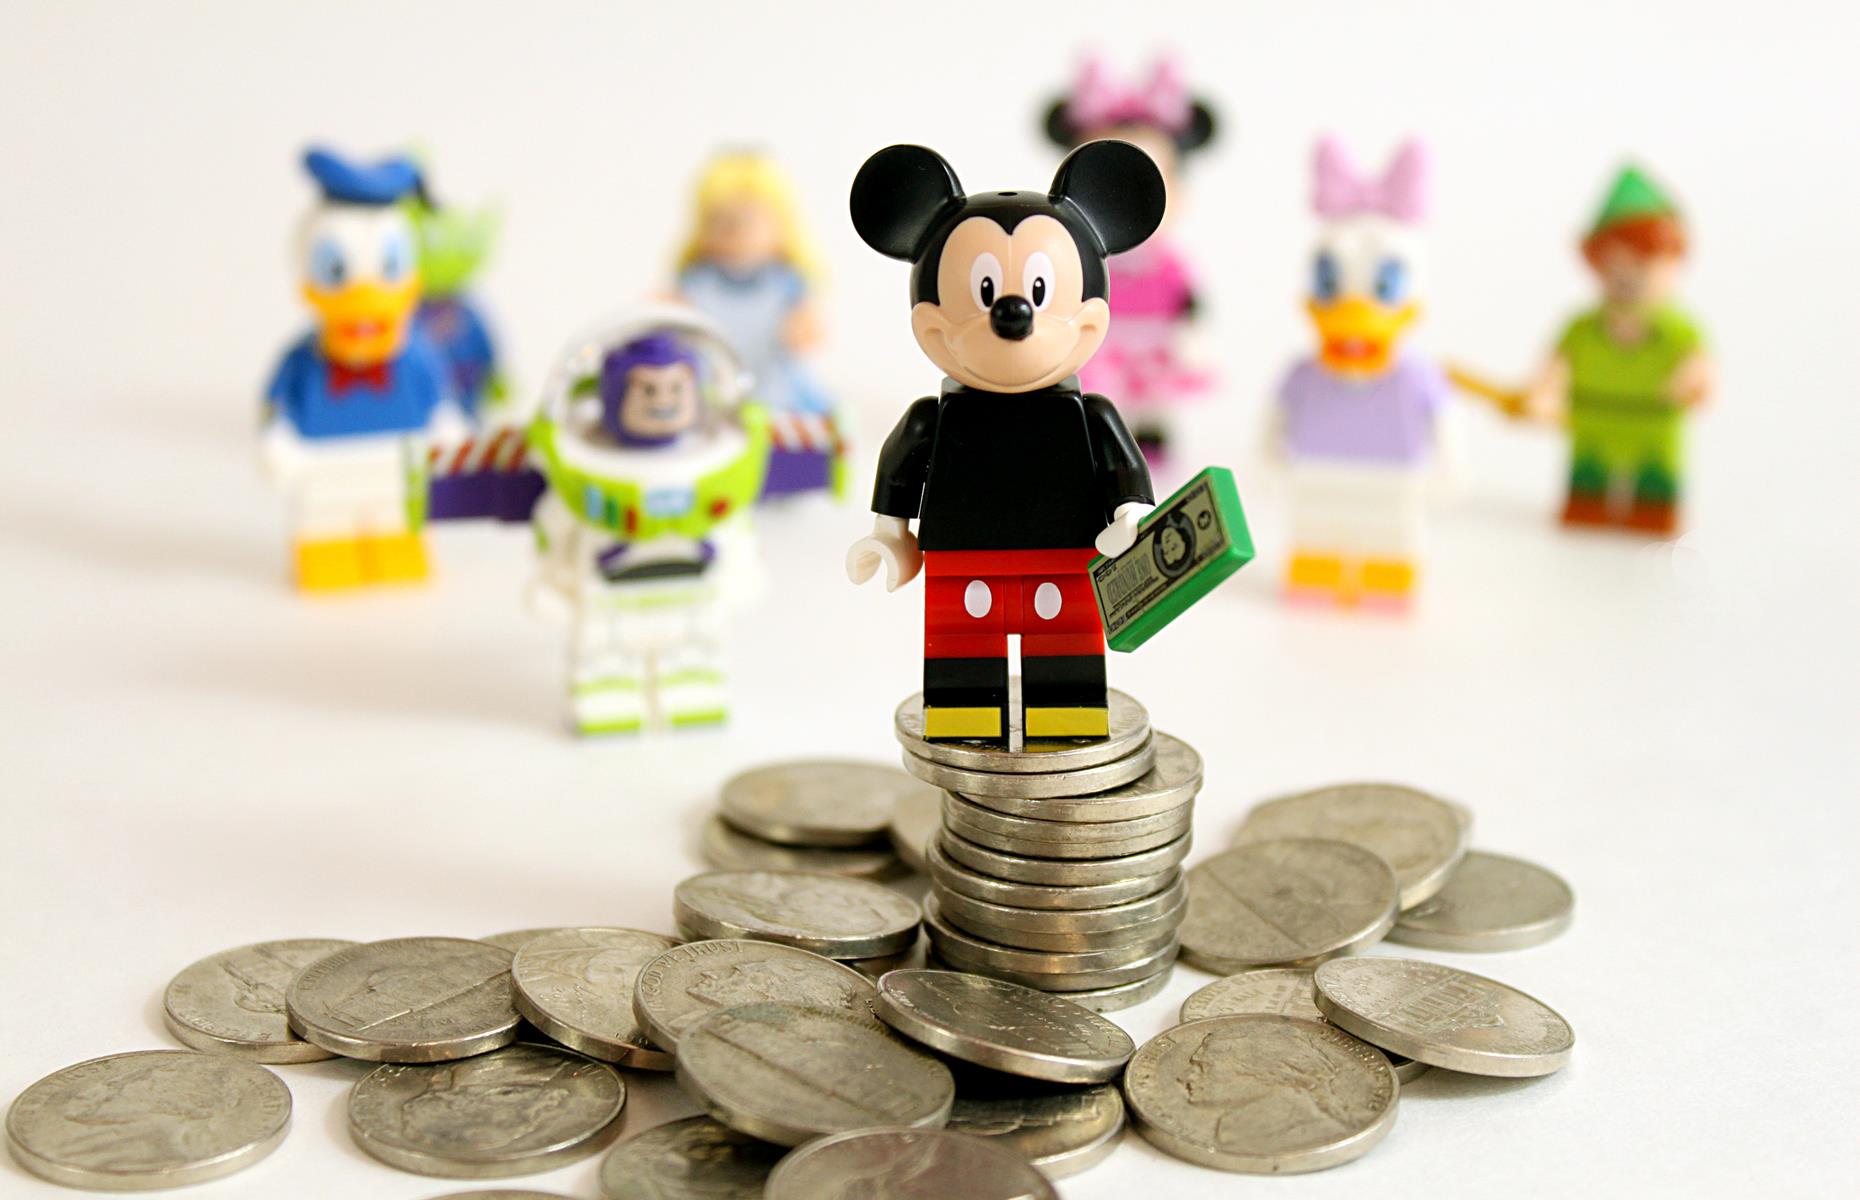 Disney's finances have been hit hard